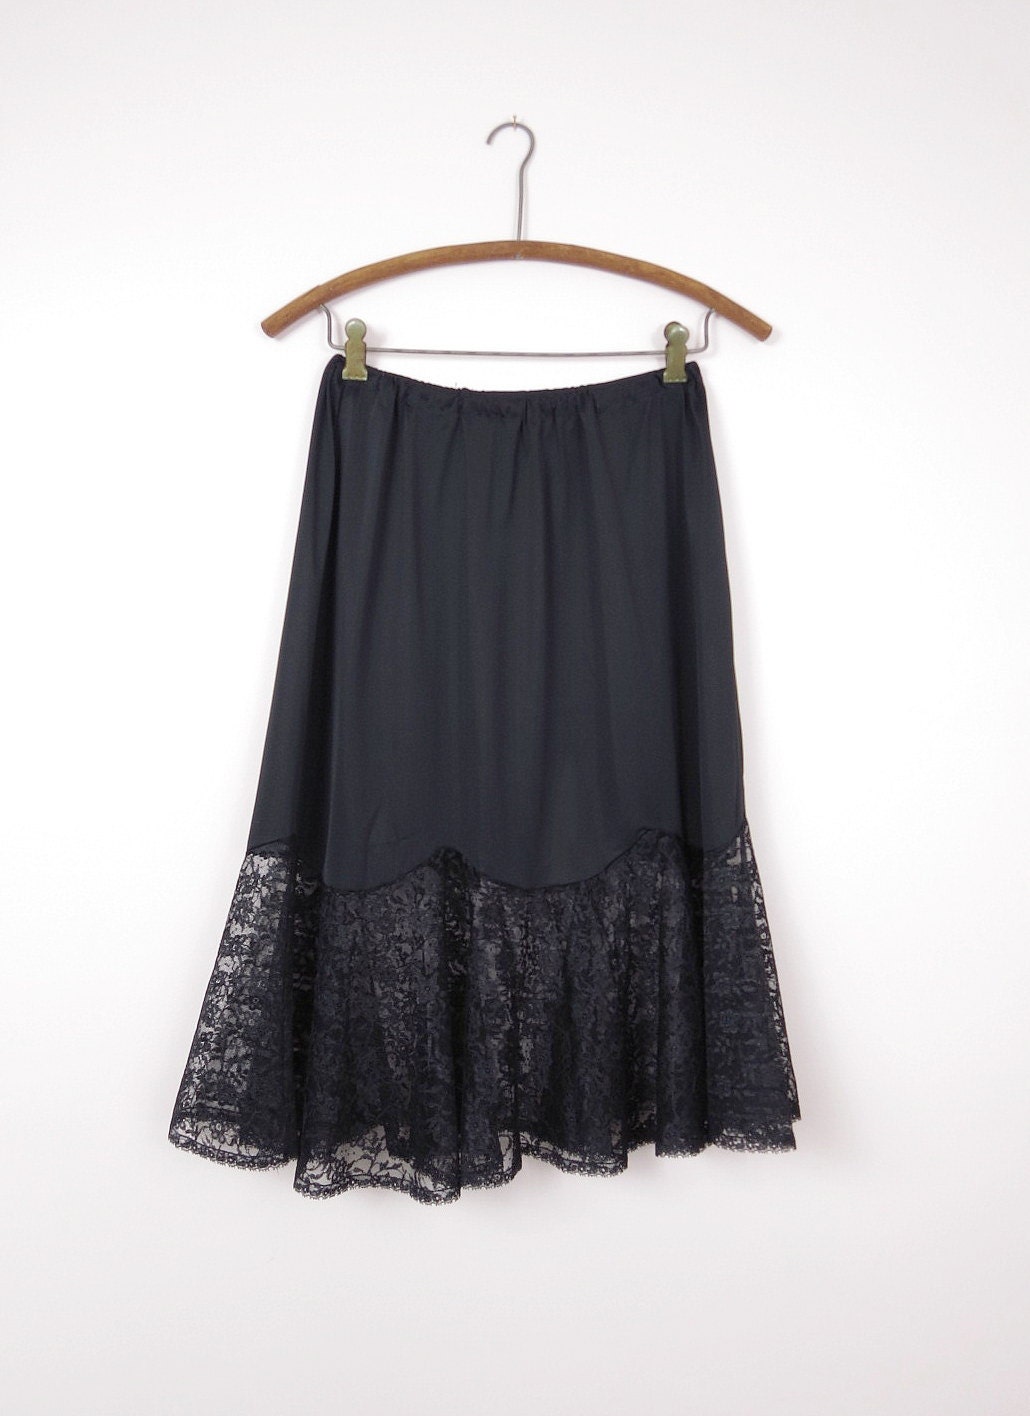 1960s Black Lace Nylon Petticoat Slip Size M/L